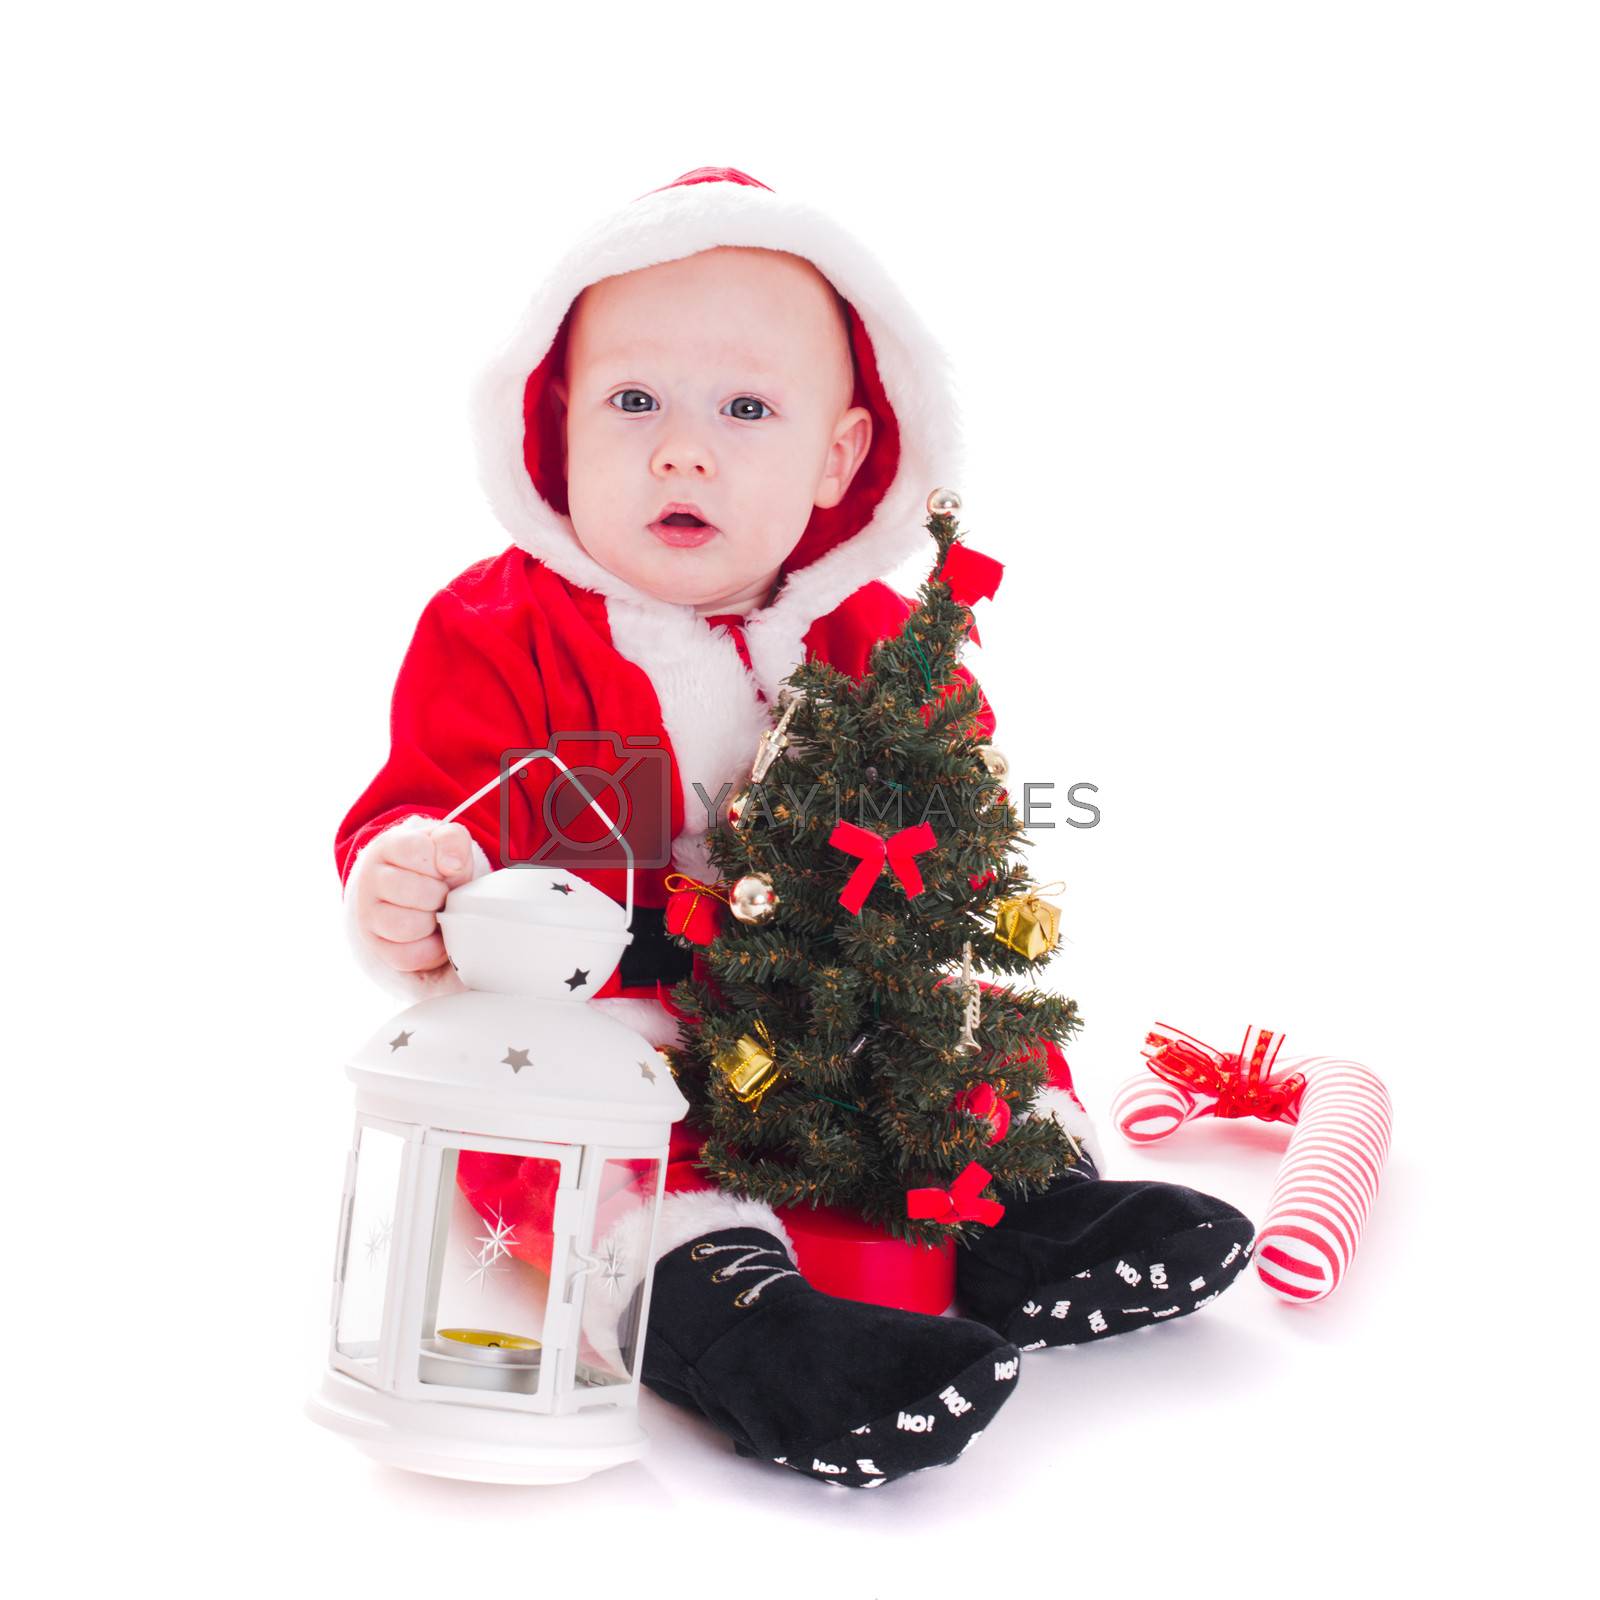 Royalty free image of Santa boy by oksix